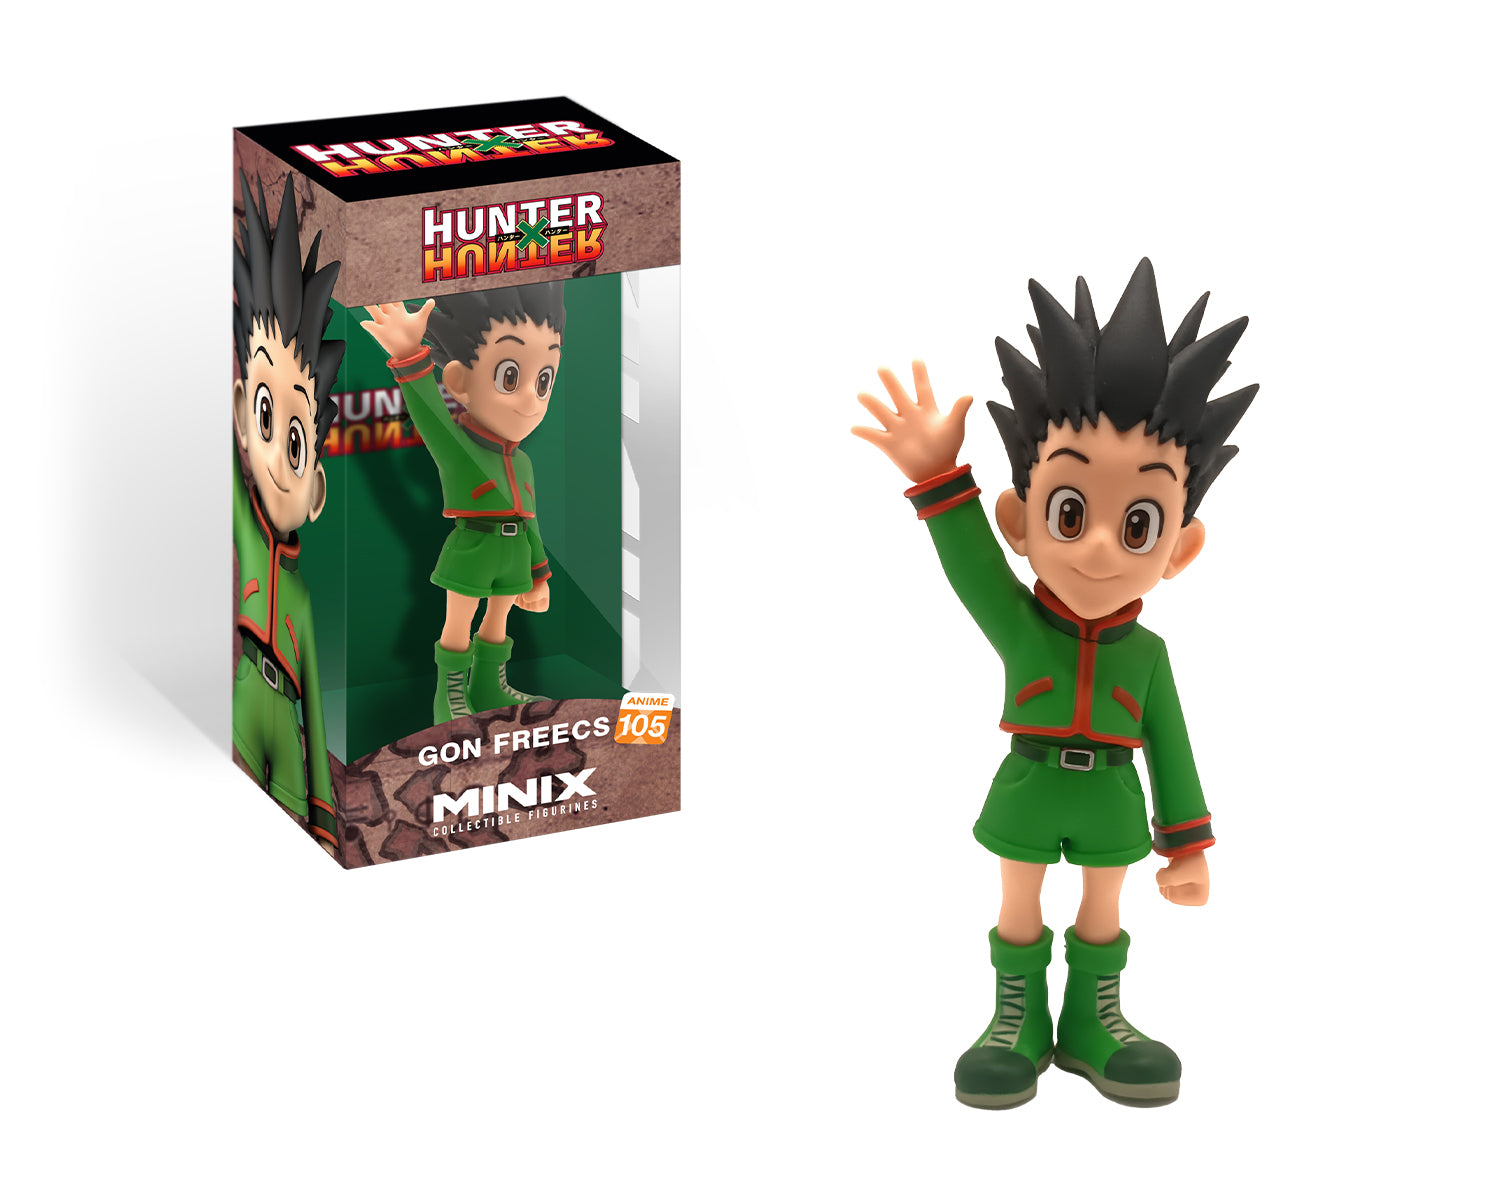 Minix -Animé -HUNTER X HUNTER -GON -Figurine -12 cm